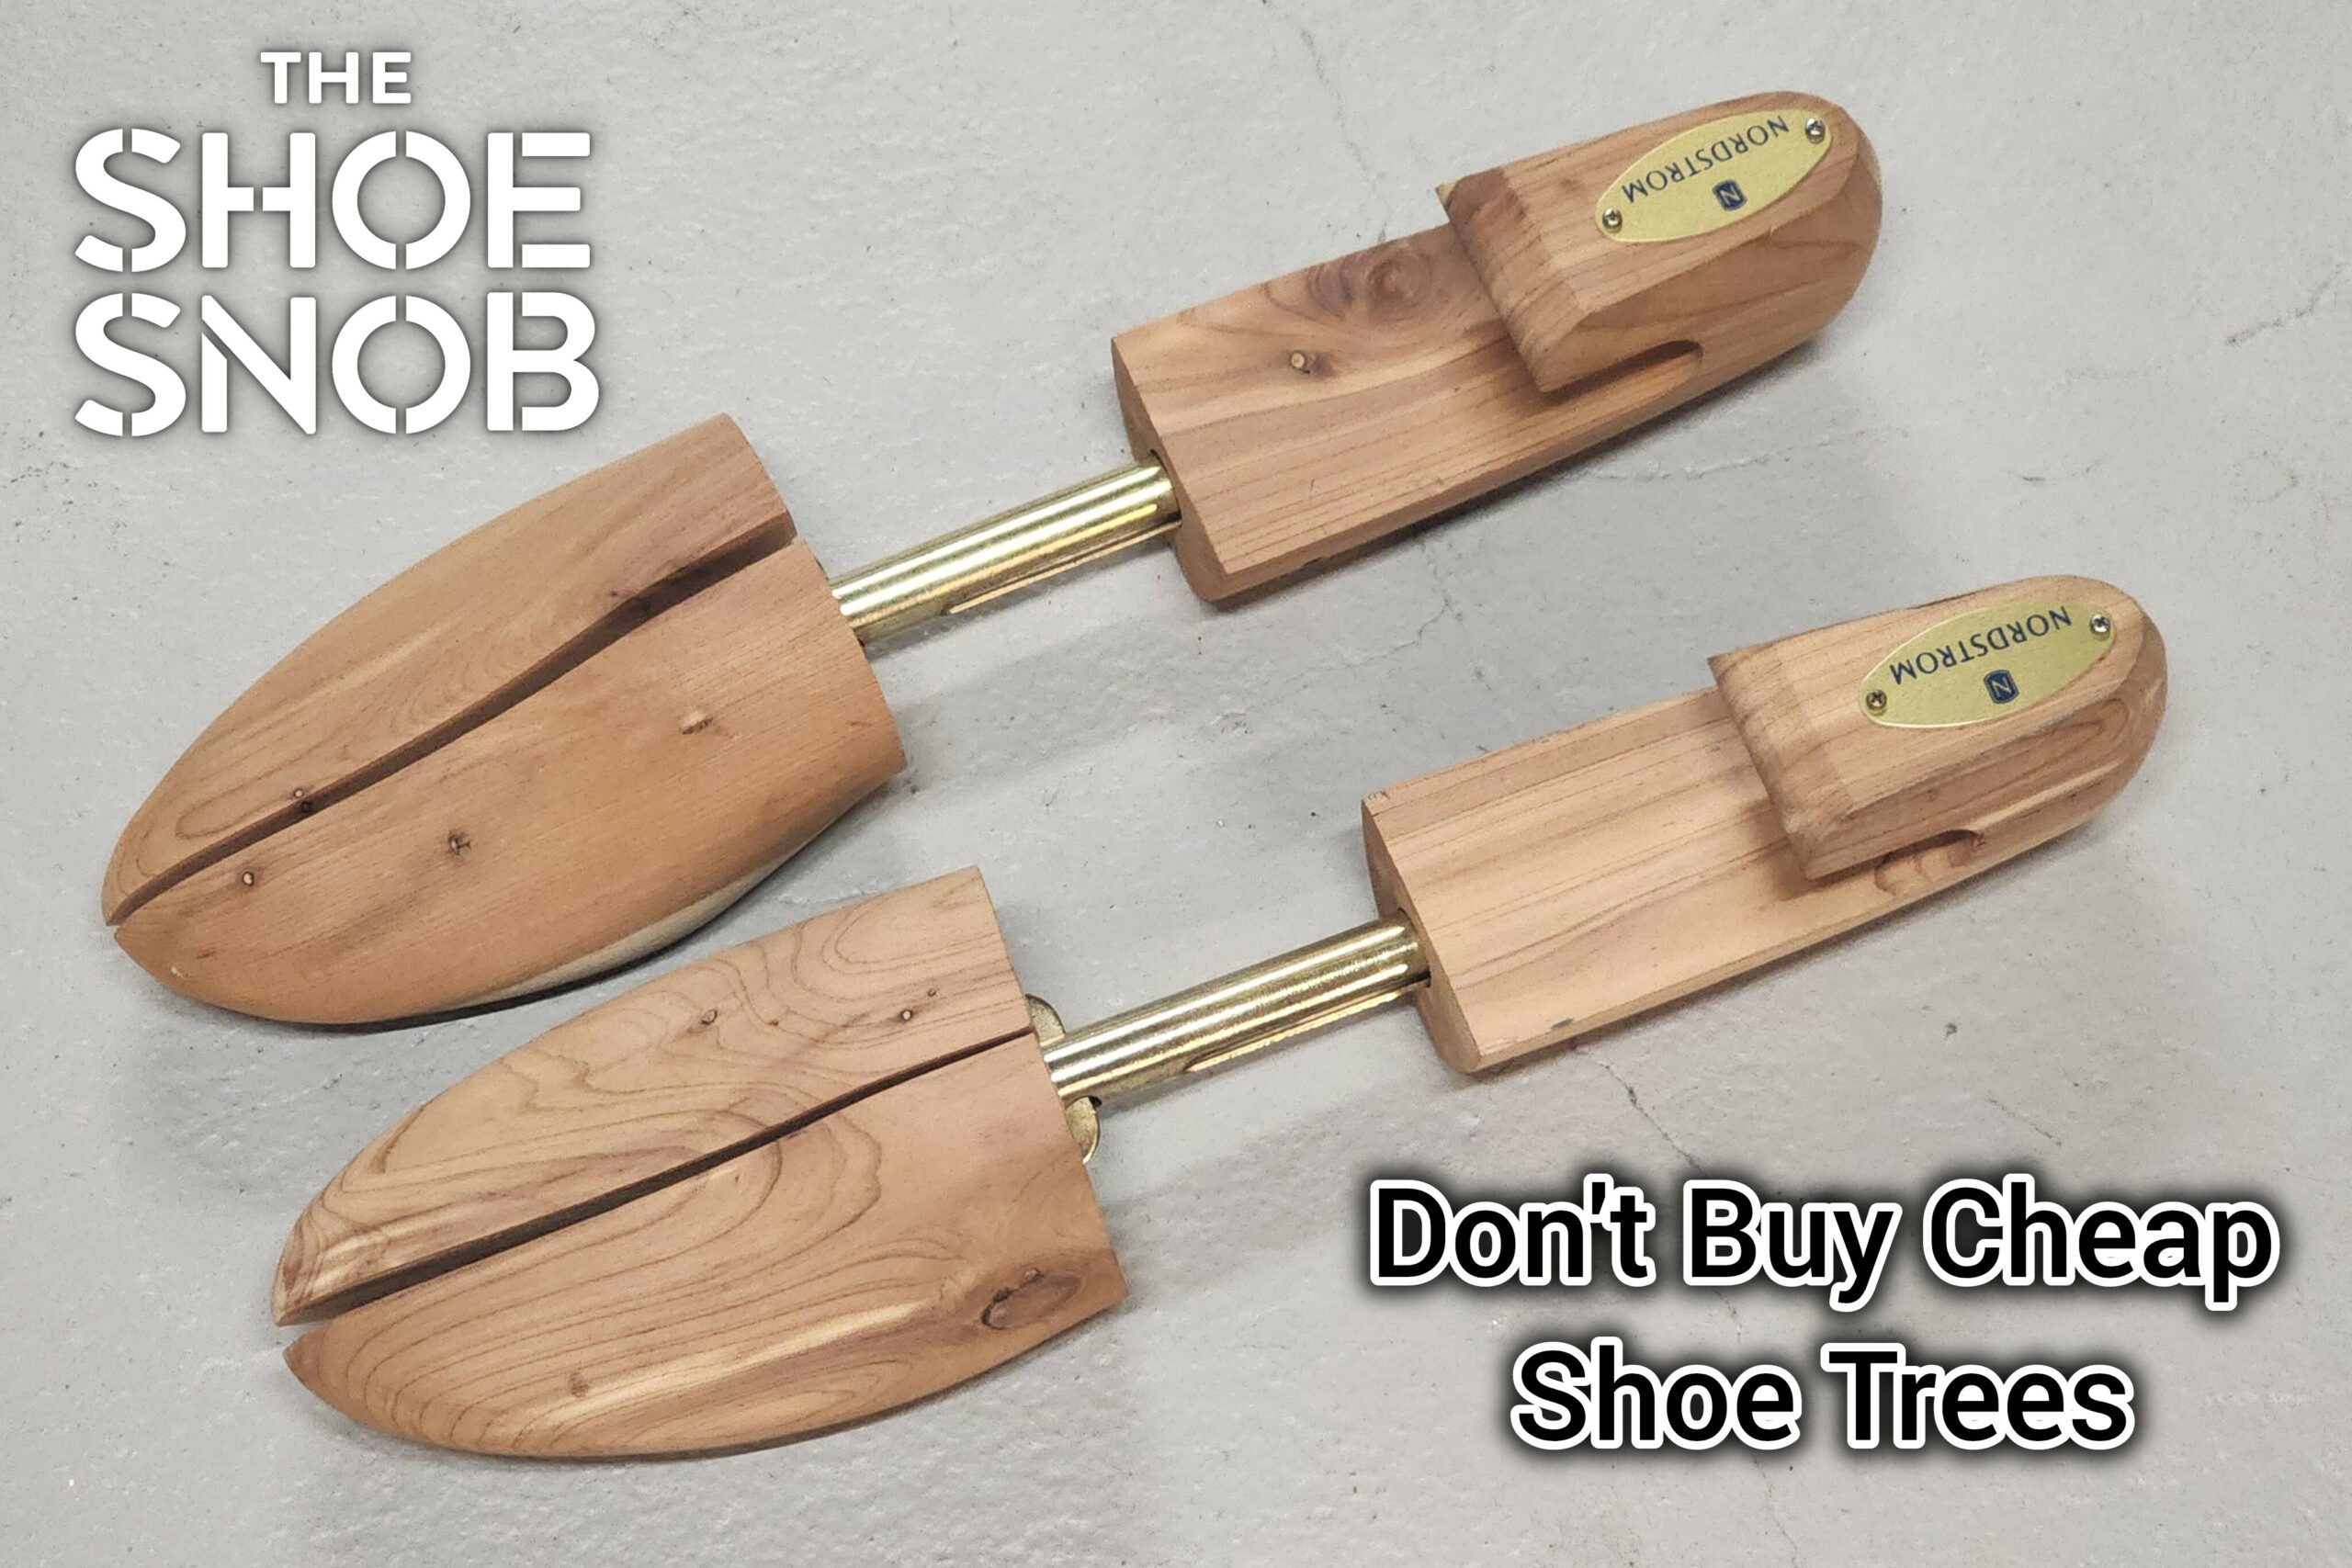 Don’t Buy Cheap Shoe Trees